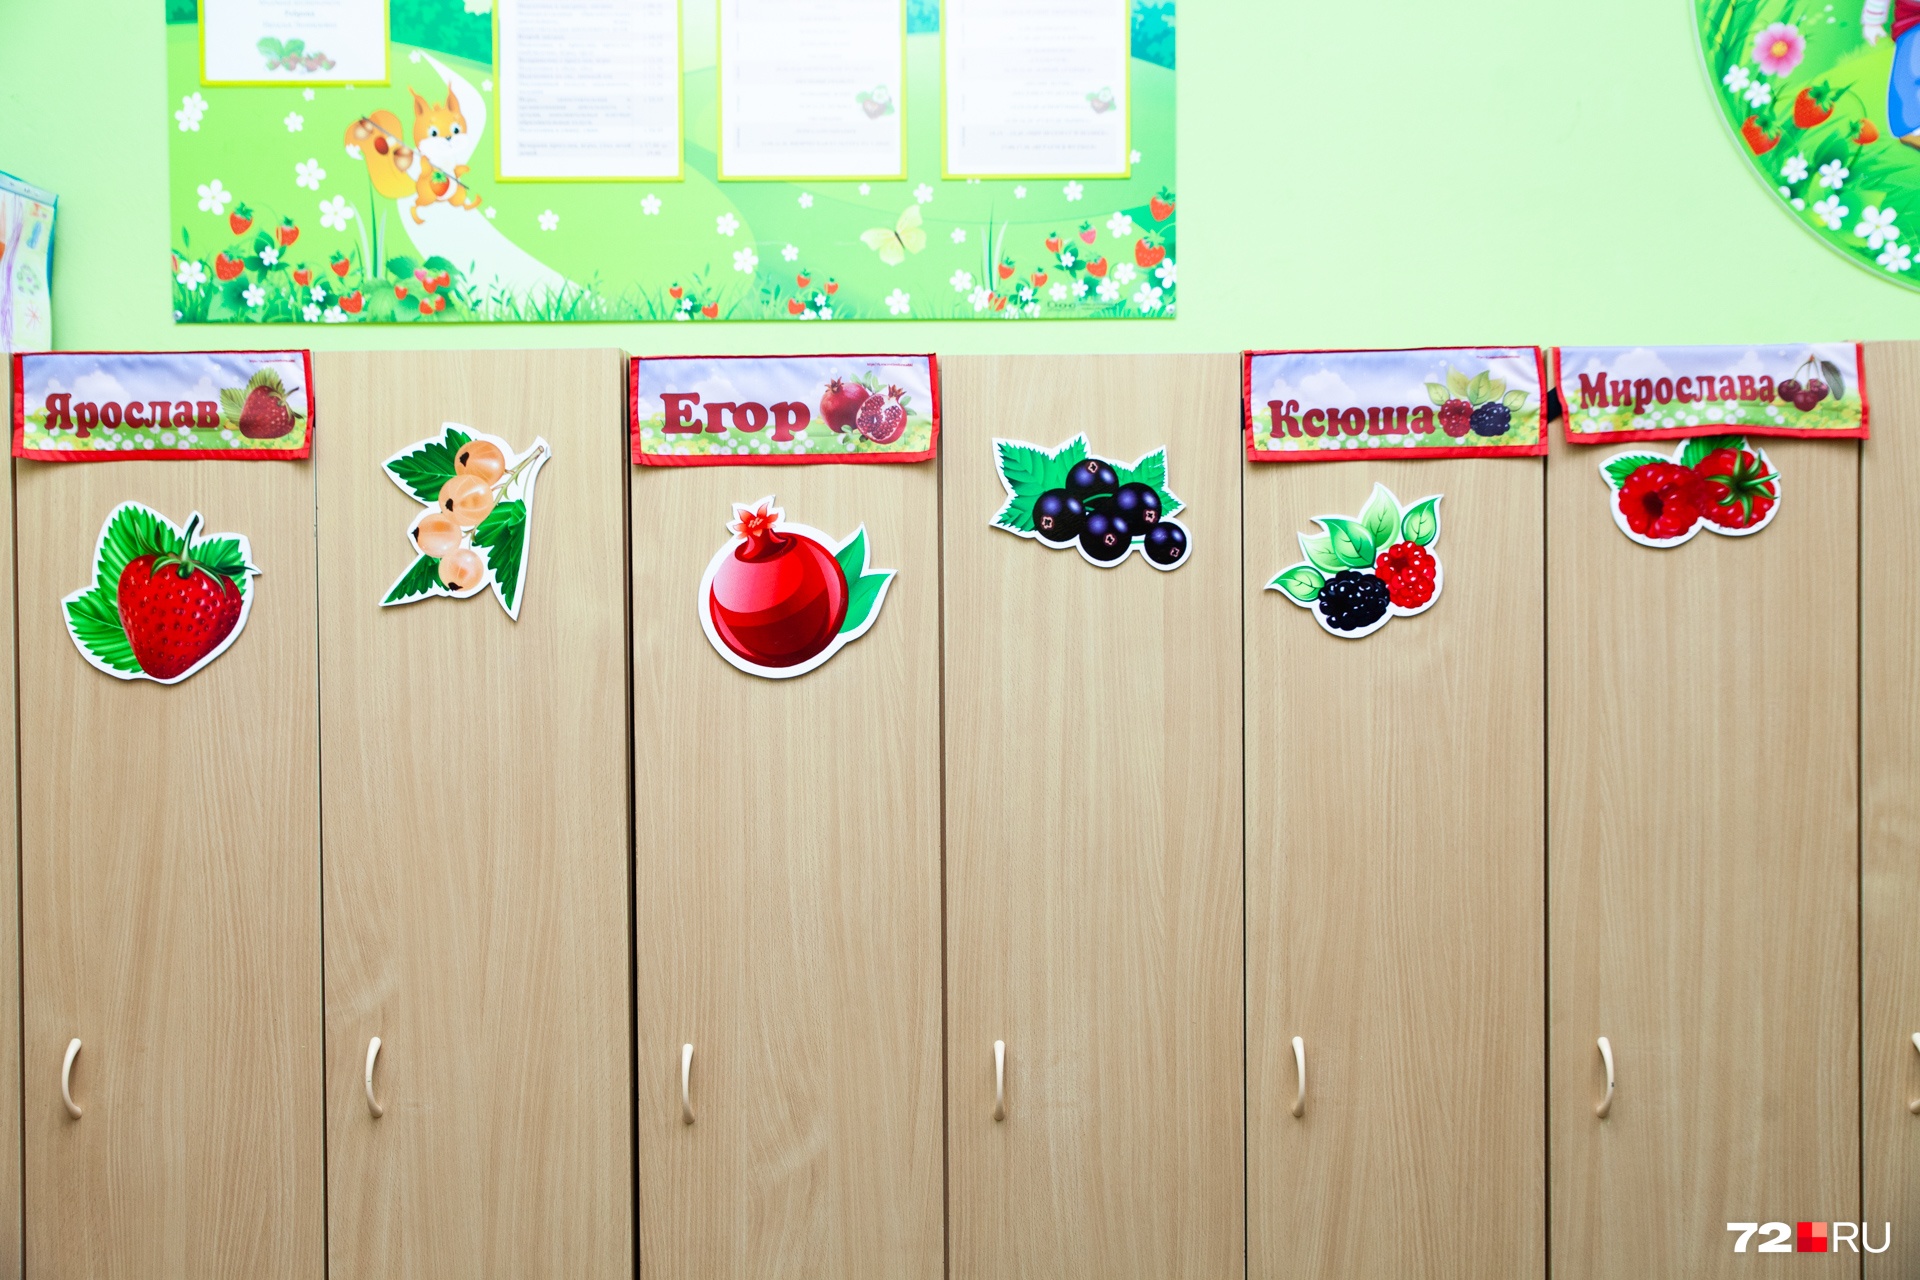 Фотографии на шкафчики в детском саду